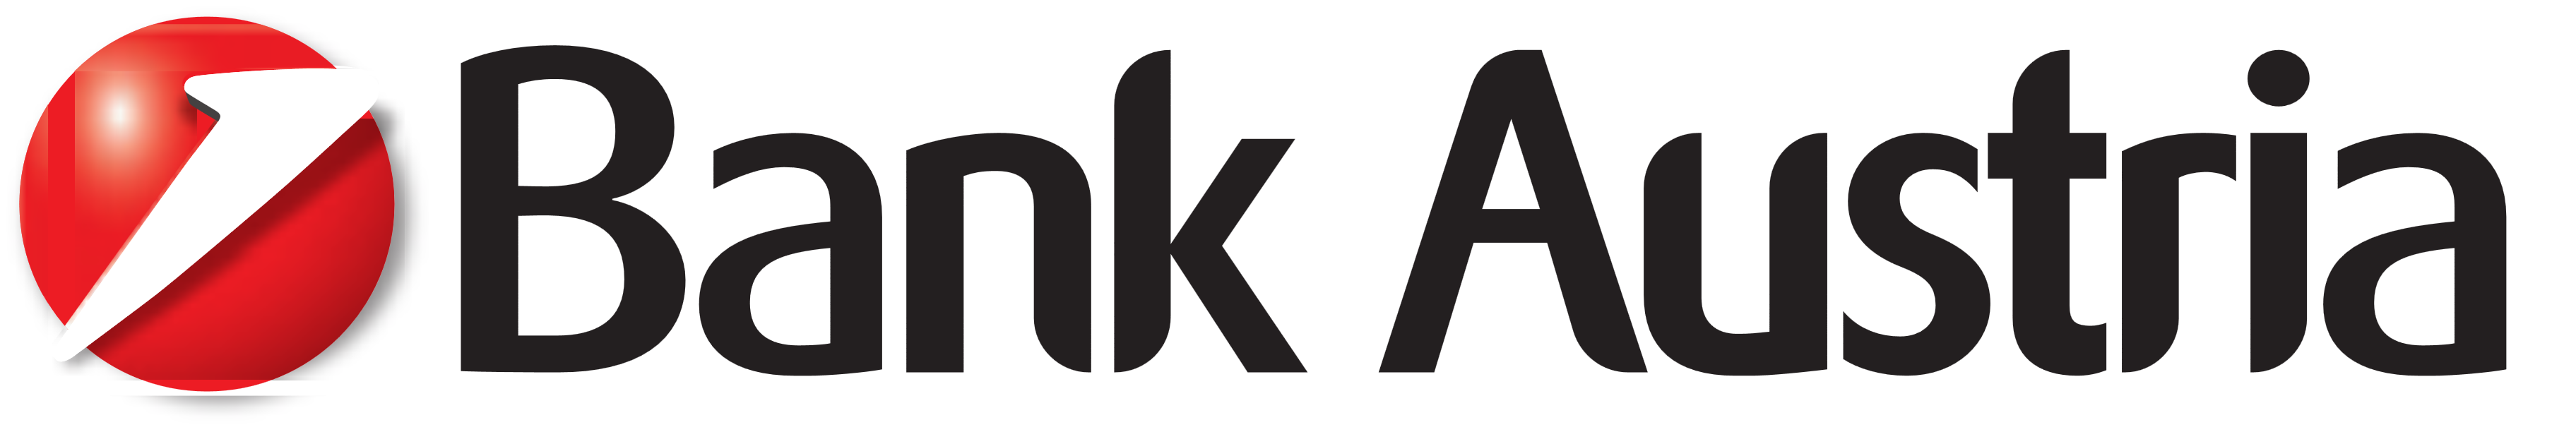 BANK AUSTRIA CREDITANSTALT Brand Logo